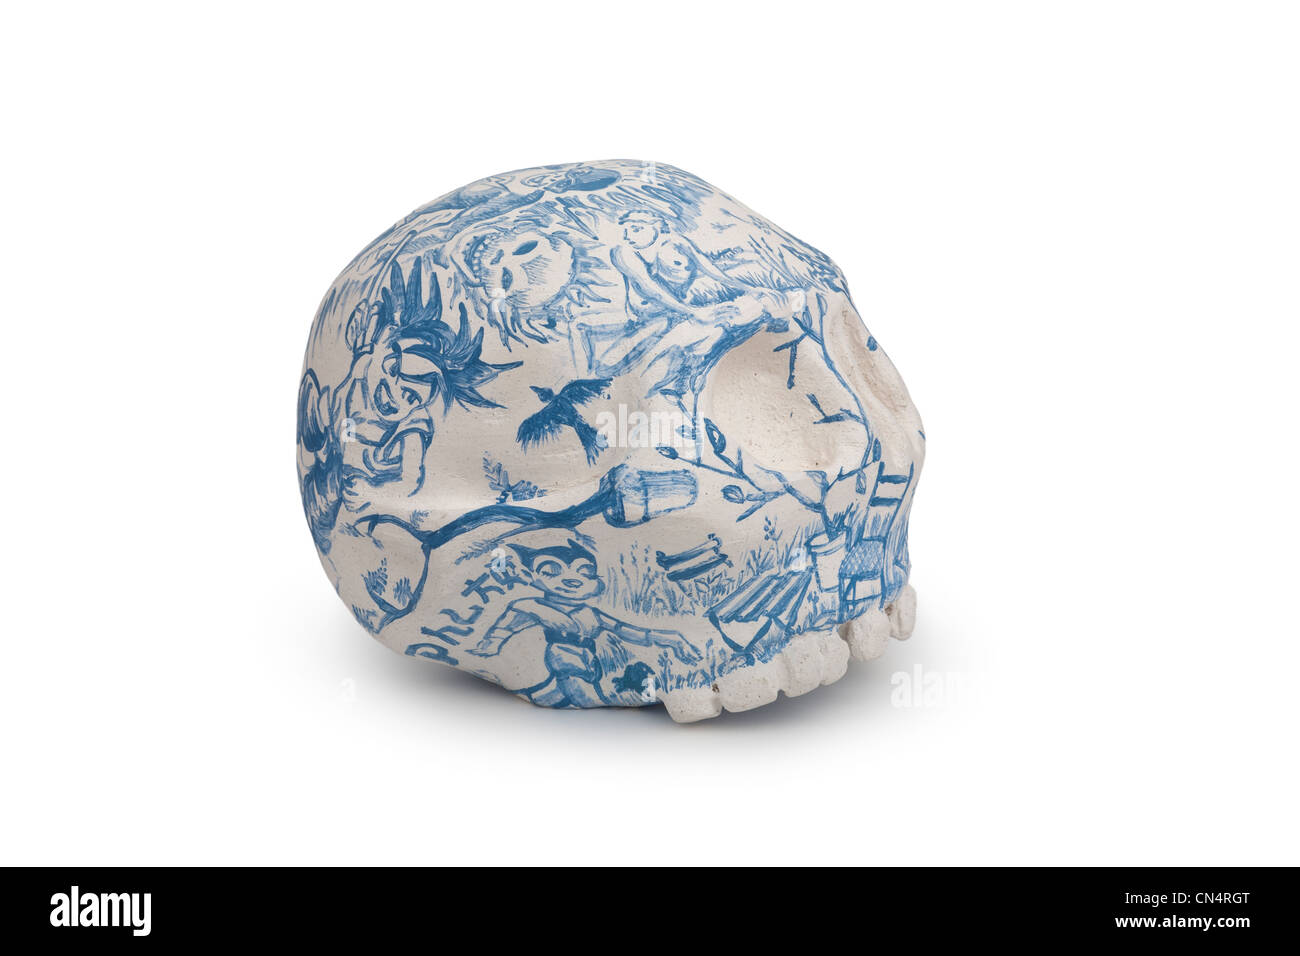 Un teschio umano scultura a forma di Jacques gallone, ceramista. Sculture en forme de crâne humain du céramiste Jacques gallone. Foto Stock